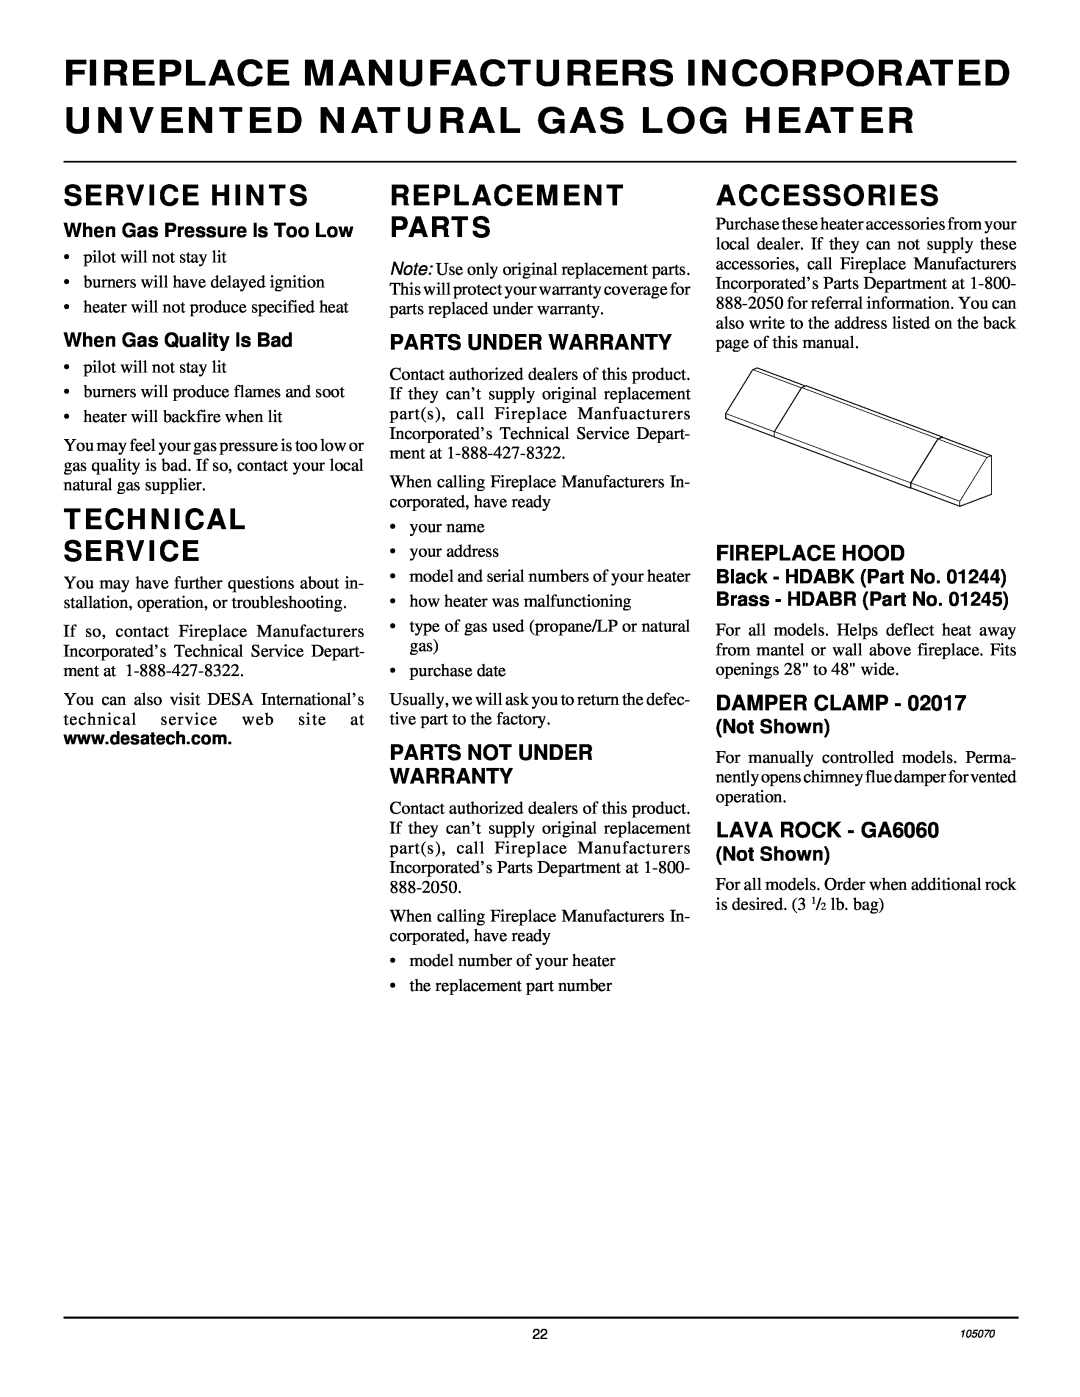 Desa VFN18MV Service Hints, Replacement Parts, Accessories, Technical Service, Parts Under Warranty, Fireplace Hood 